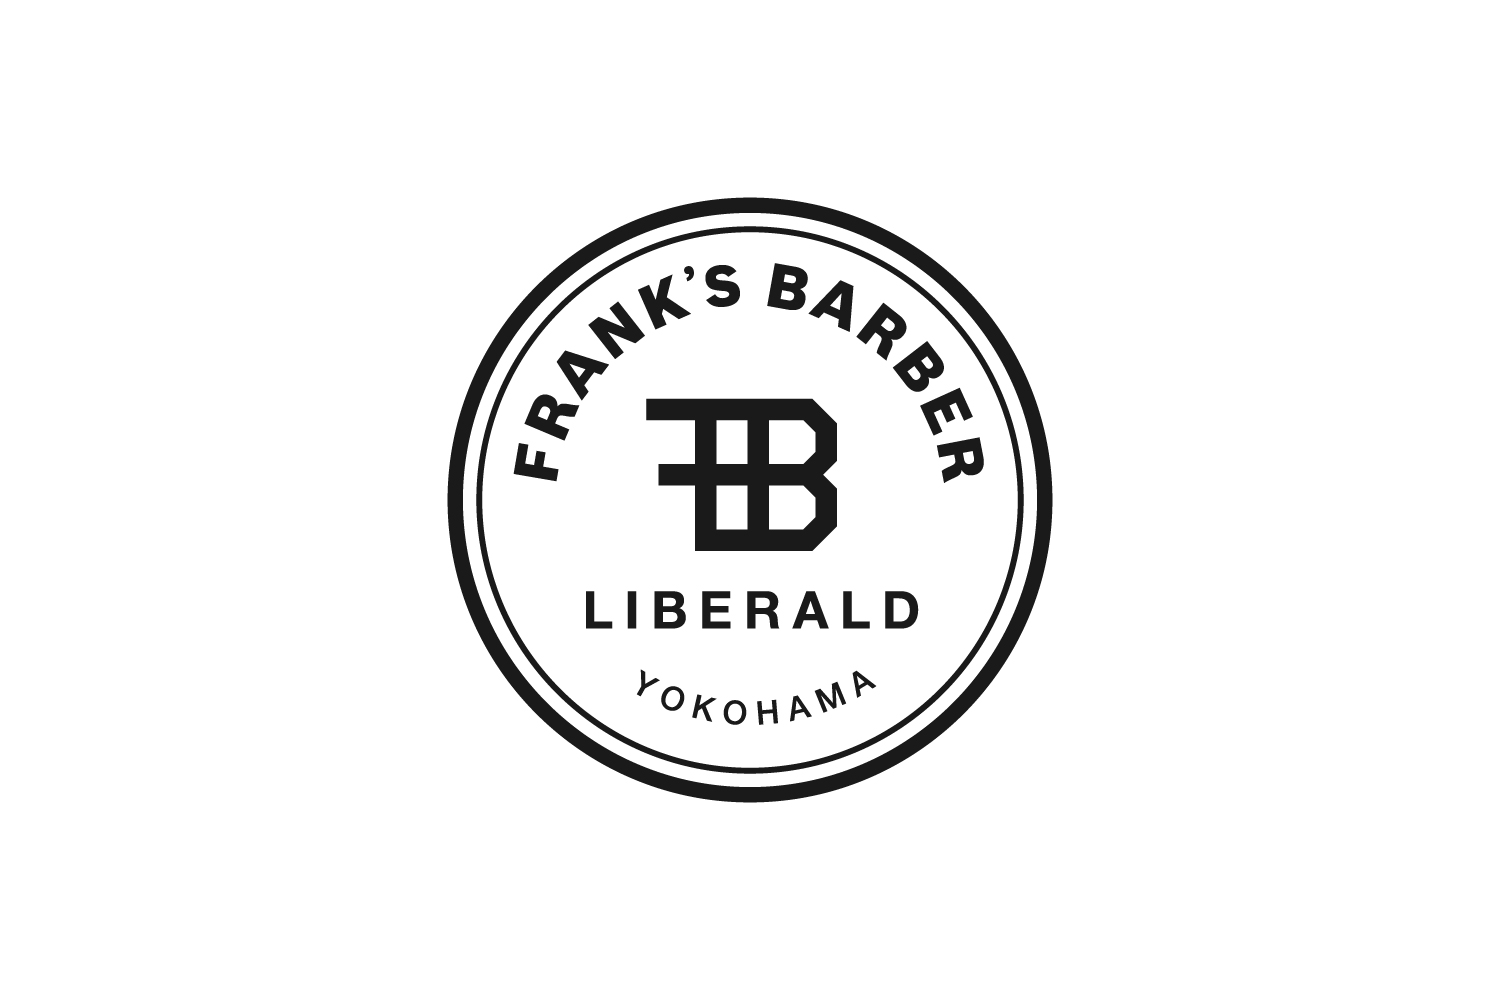 FRANK'S BARBER LIBERALD 横浜　ロゴデザイン